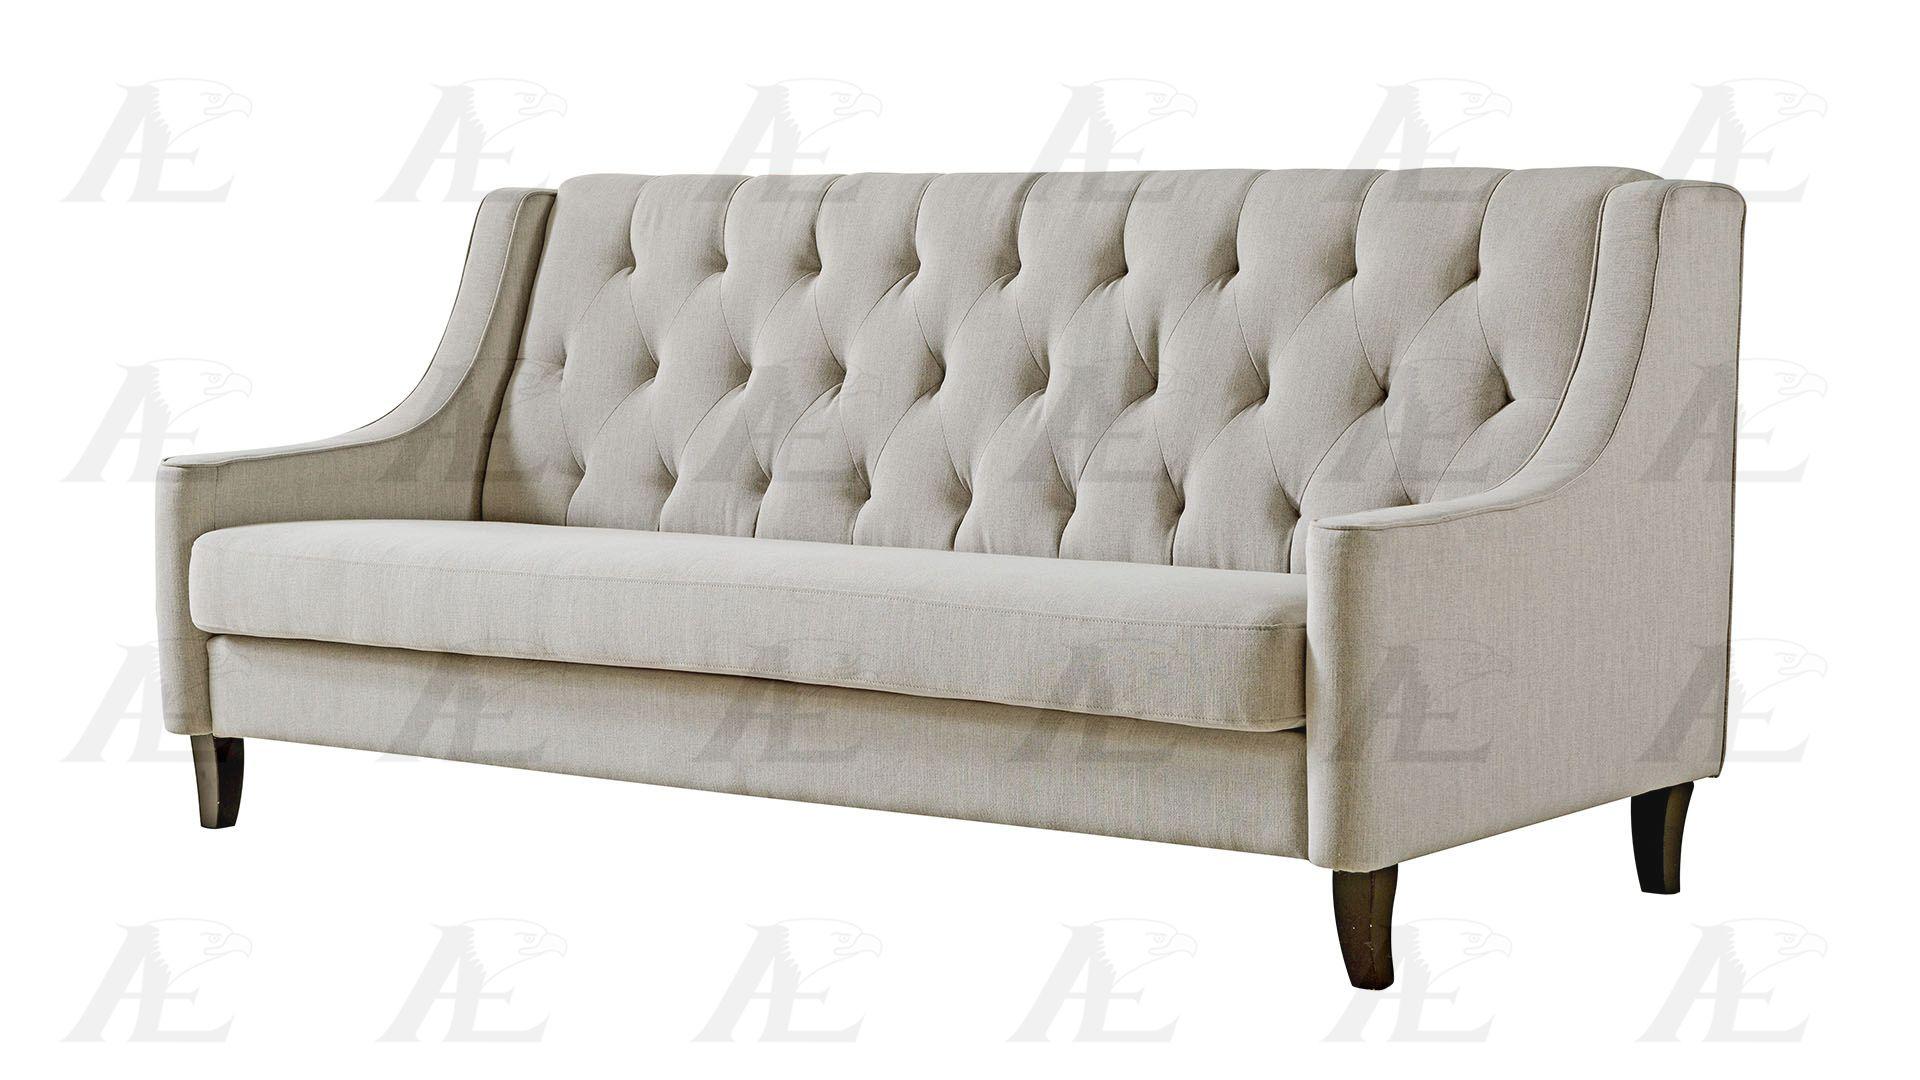 

    
American Eagle Furniture AE2372-LG Sofa Light Gray AE2372-LG
